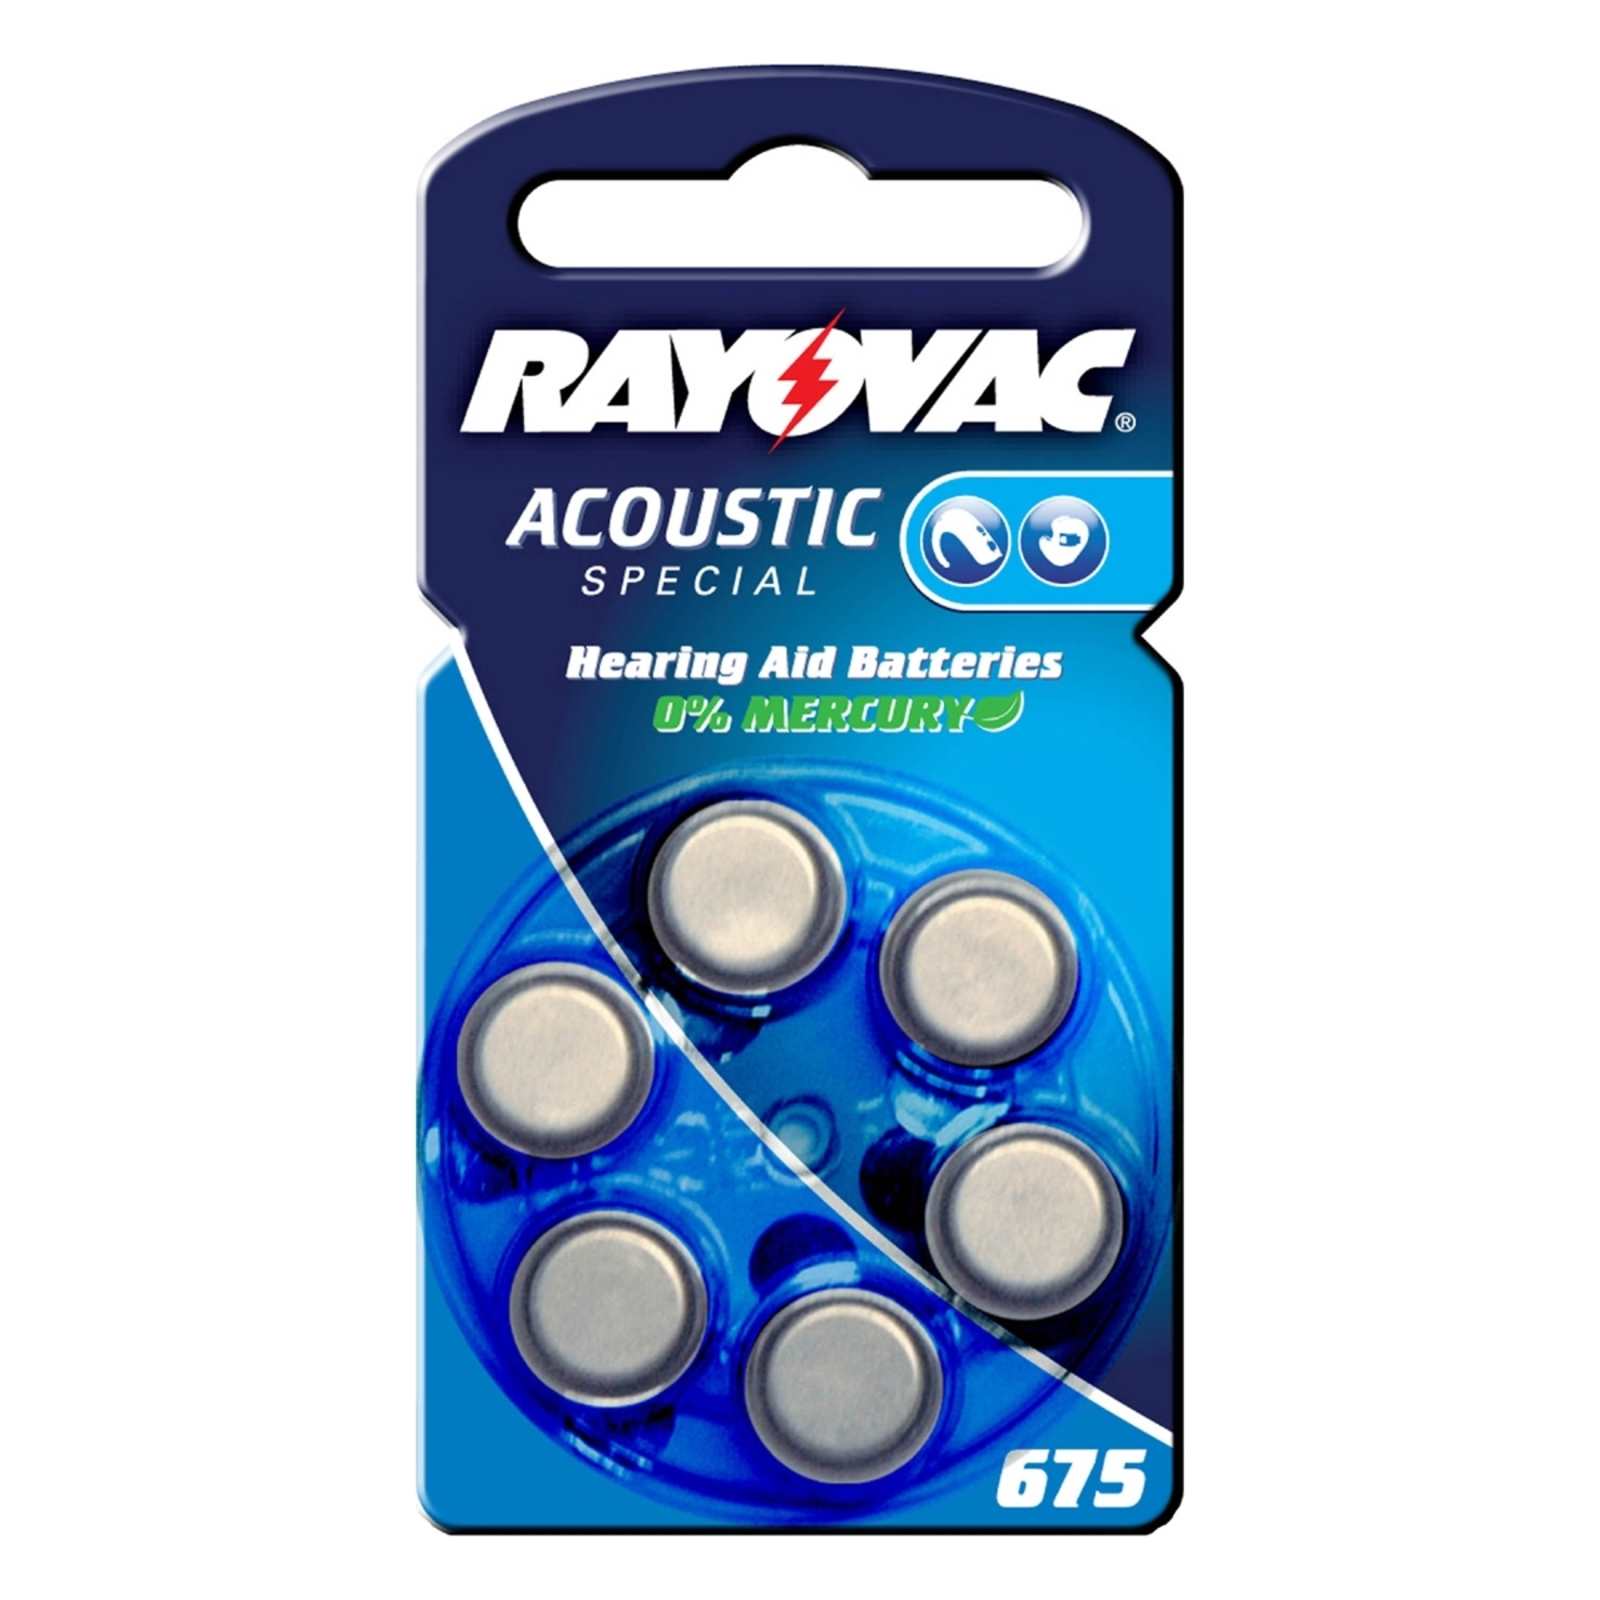 Mała bateria Rayovac 675 Acoustic 1,4V, 640m Ah 